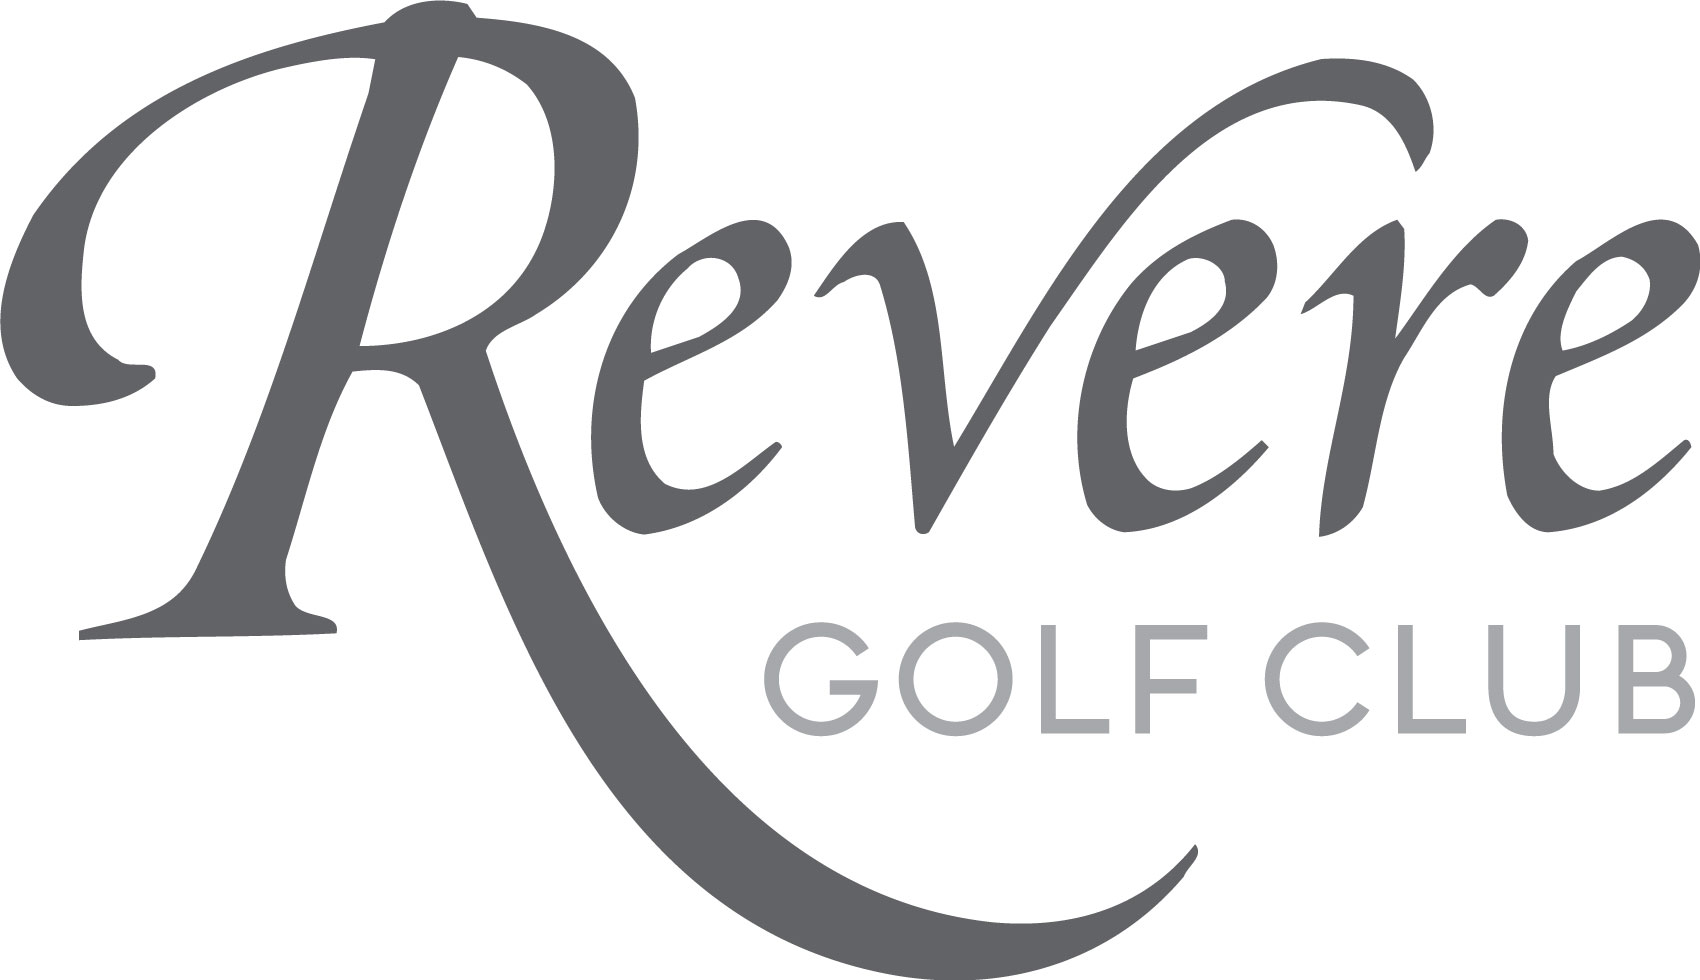 Image result for revere golf club logo